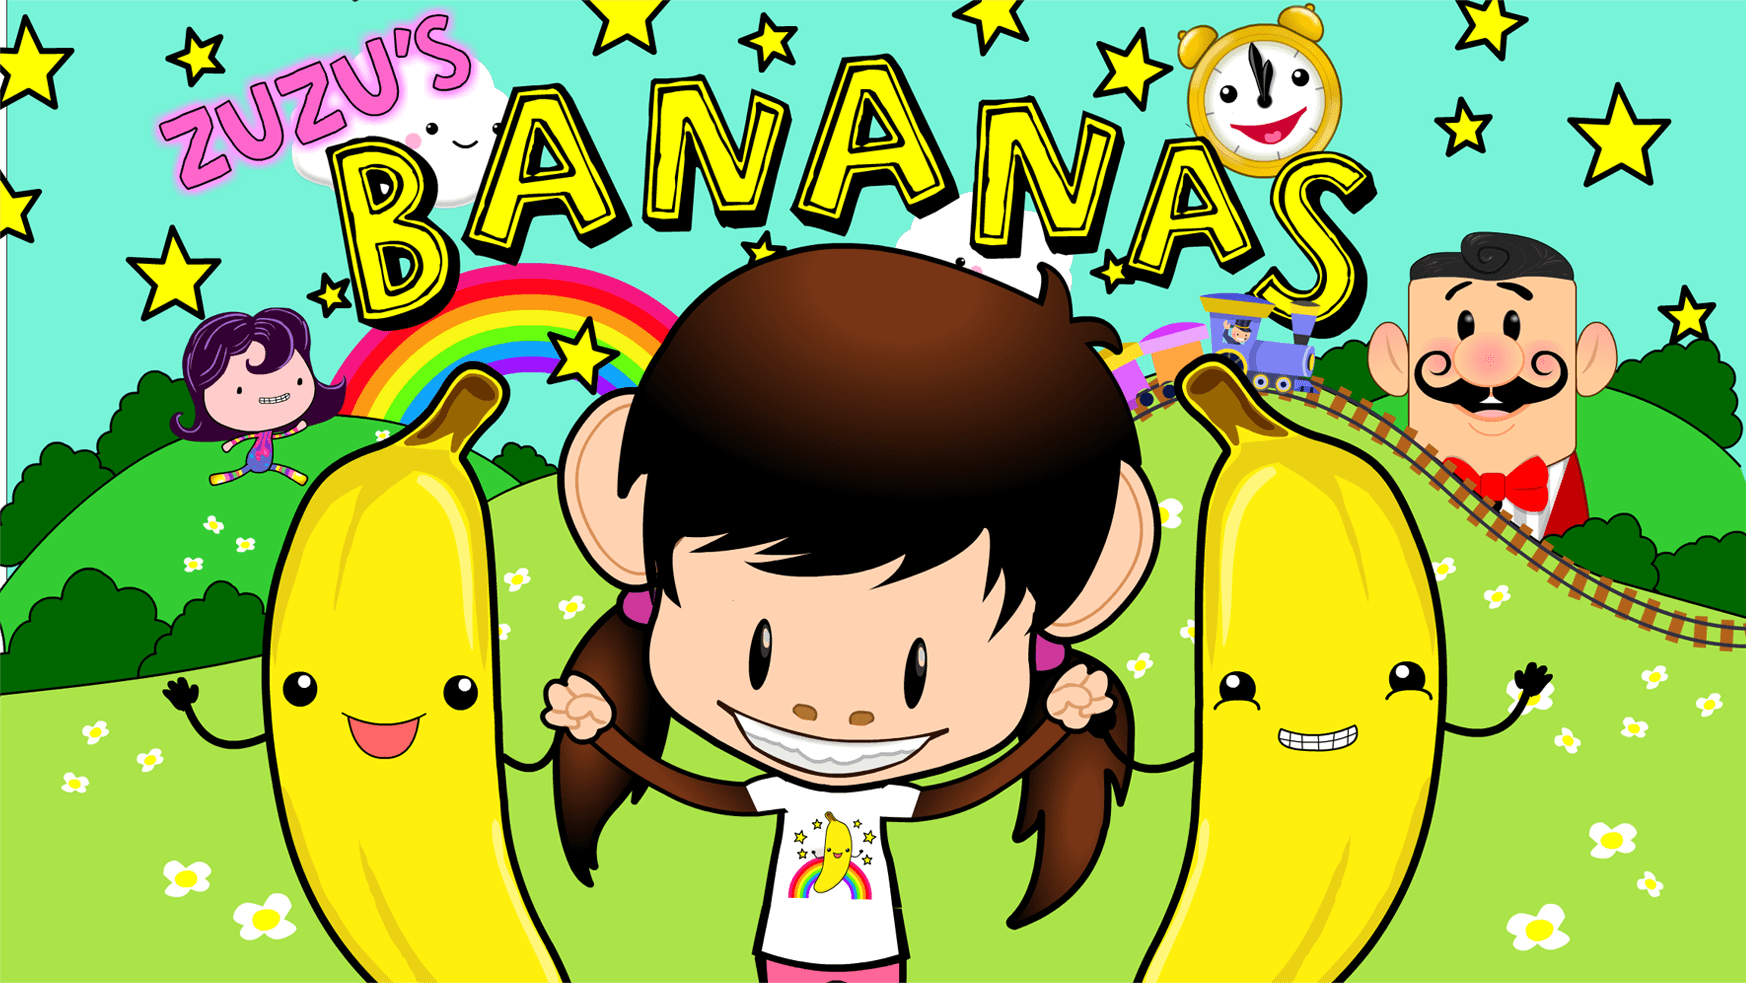 Zuzu’s Bananas